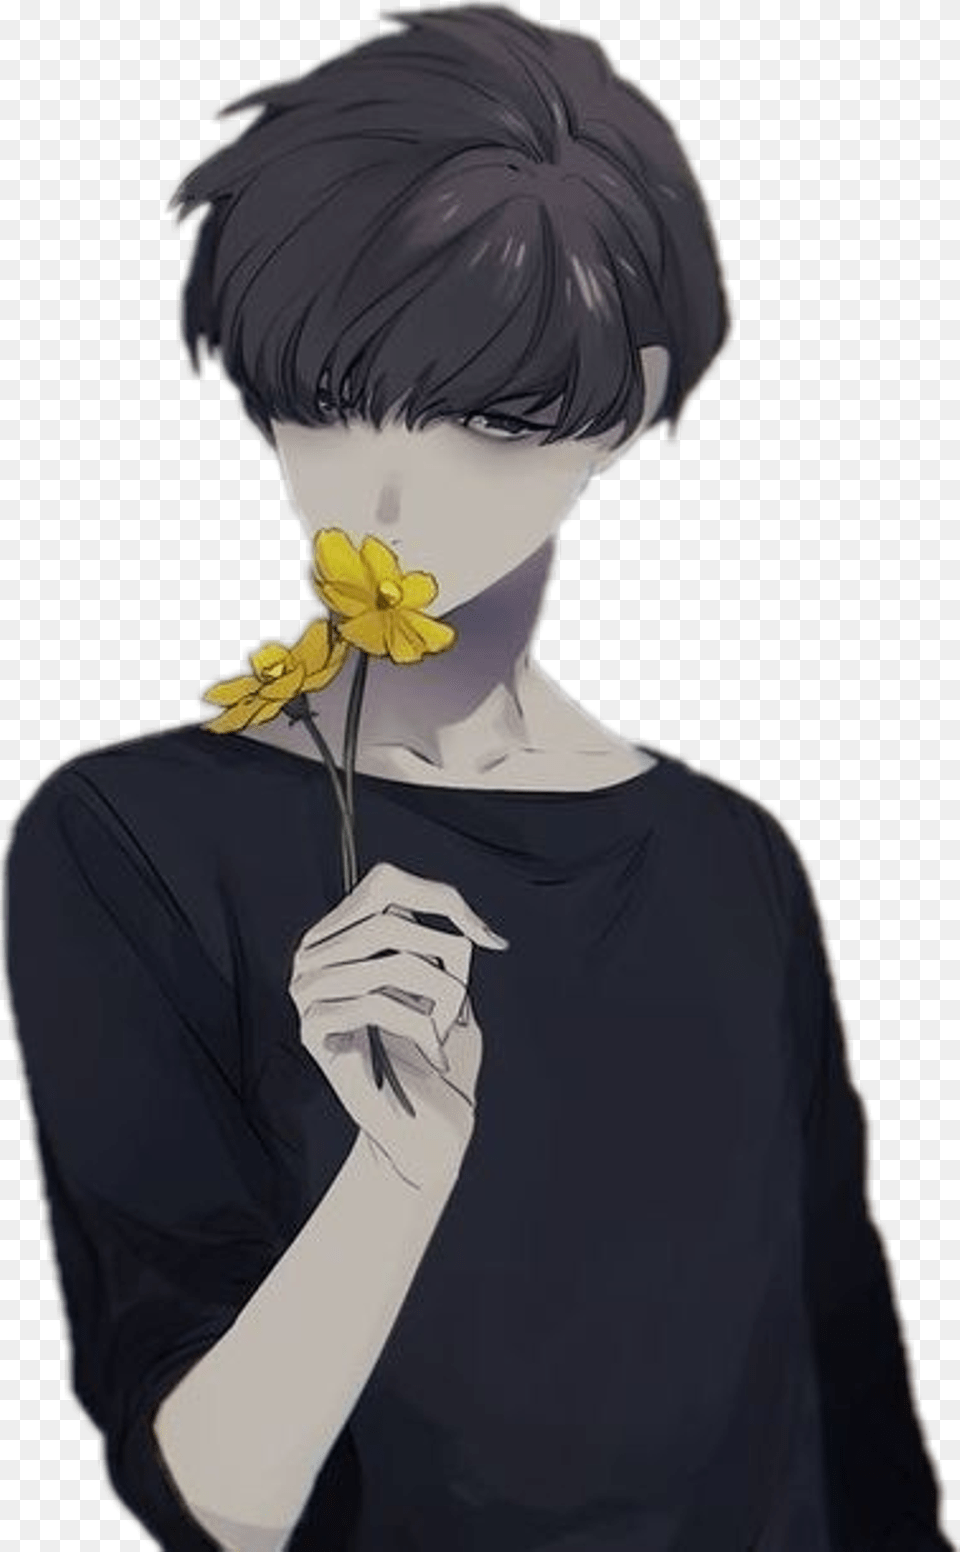 Anime Animeboy Animeboy Flower Yellow Sad Boy Cute Psycho Boy Anime, Adult, Person, Man, Male Free Transparent Png